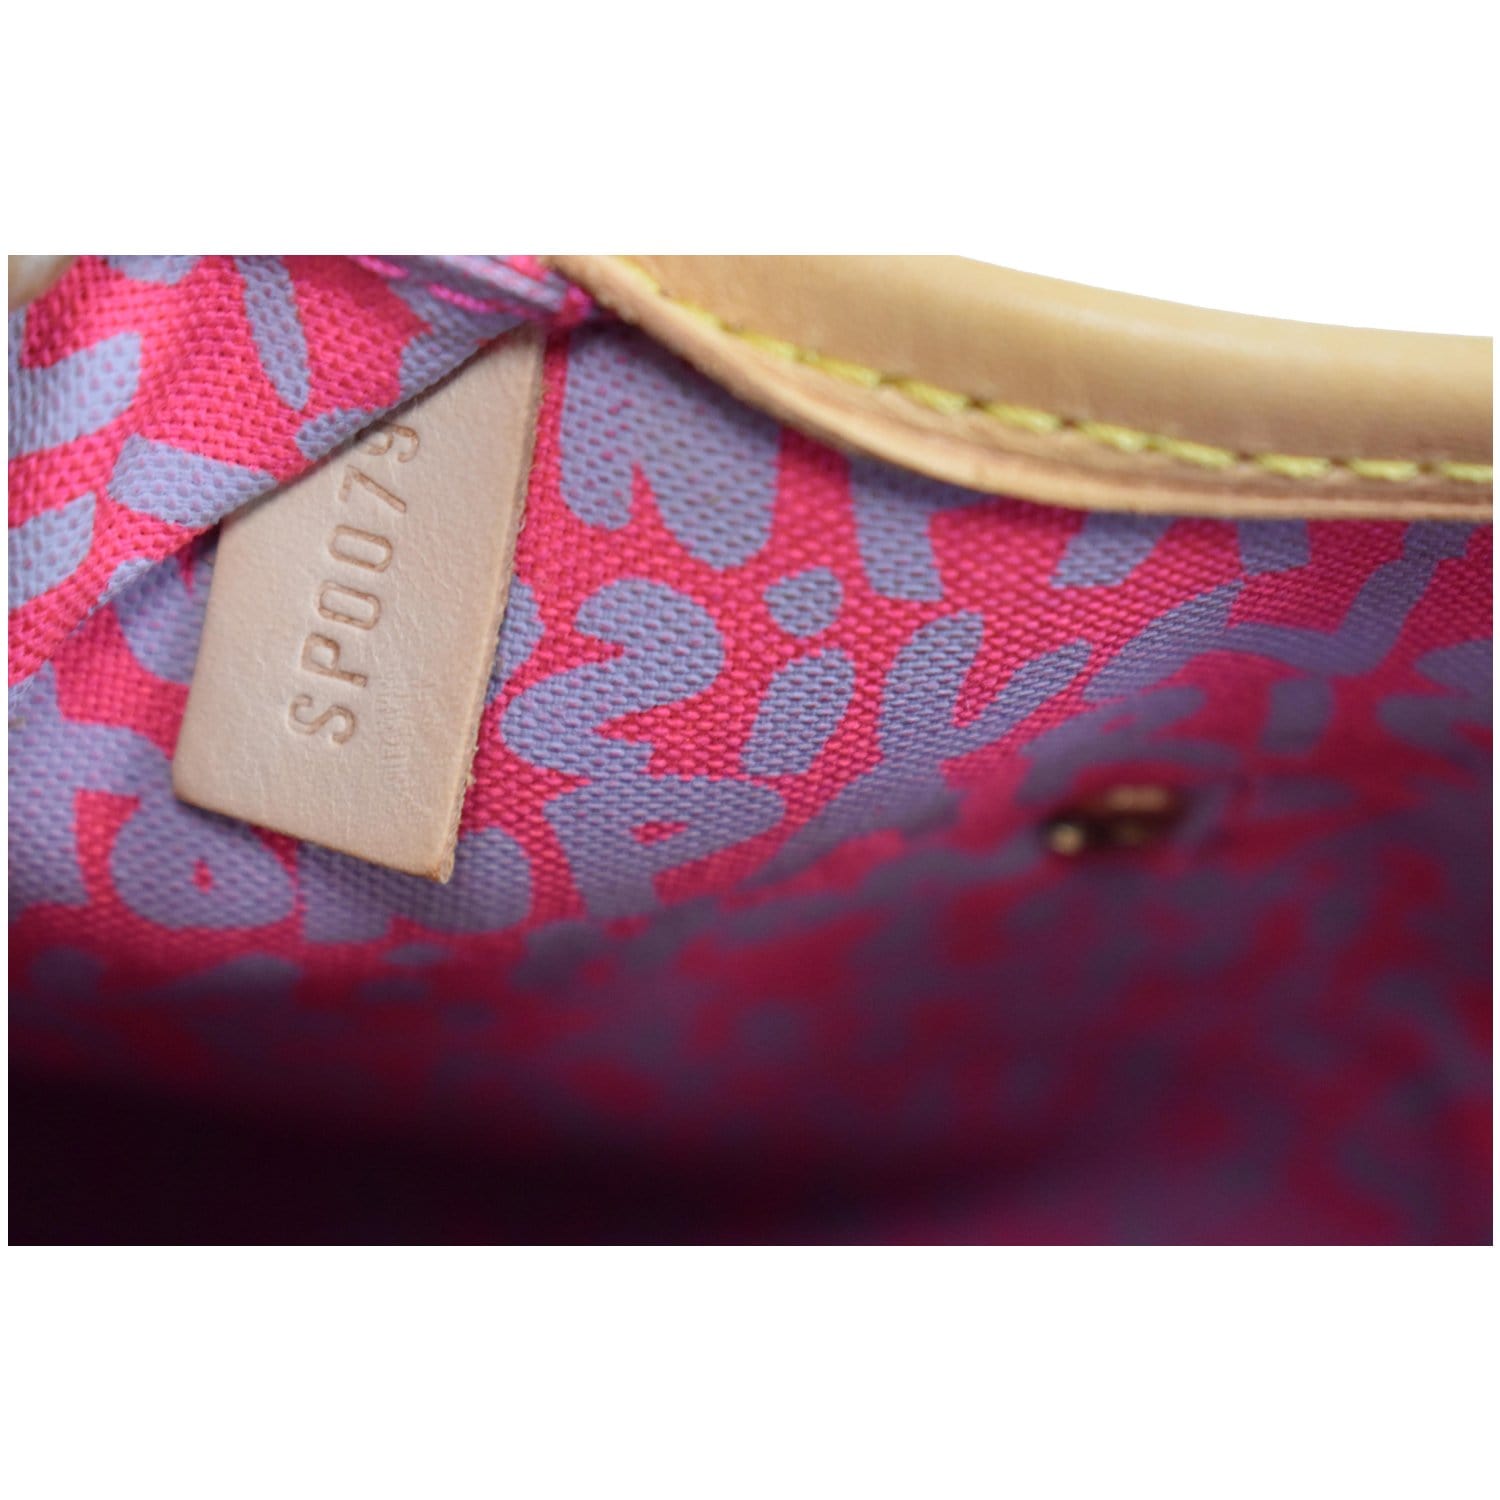 Louis Vuitton Neverfull GM Monogram Graffiti Tote Bag Pink